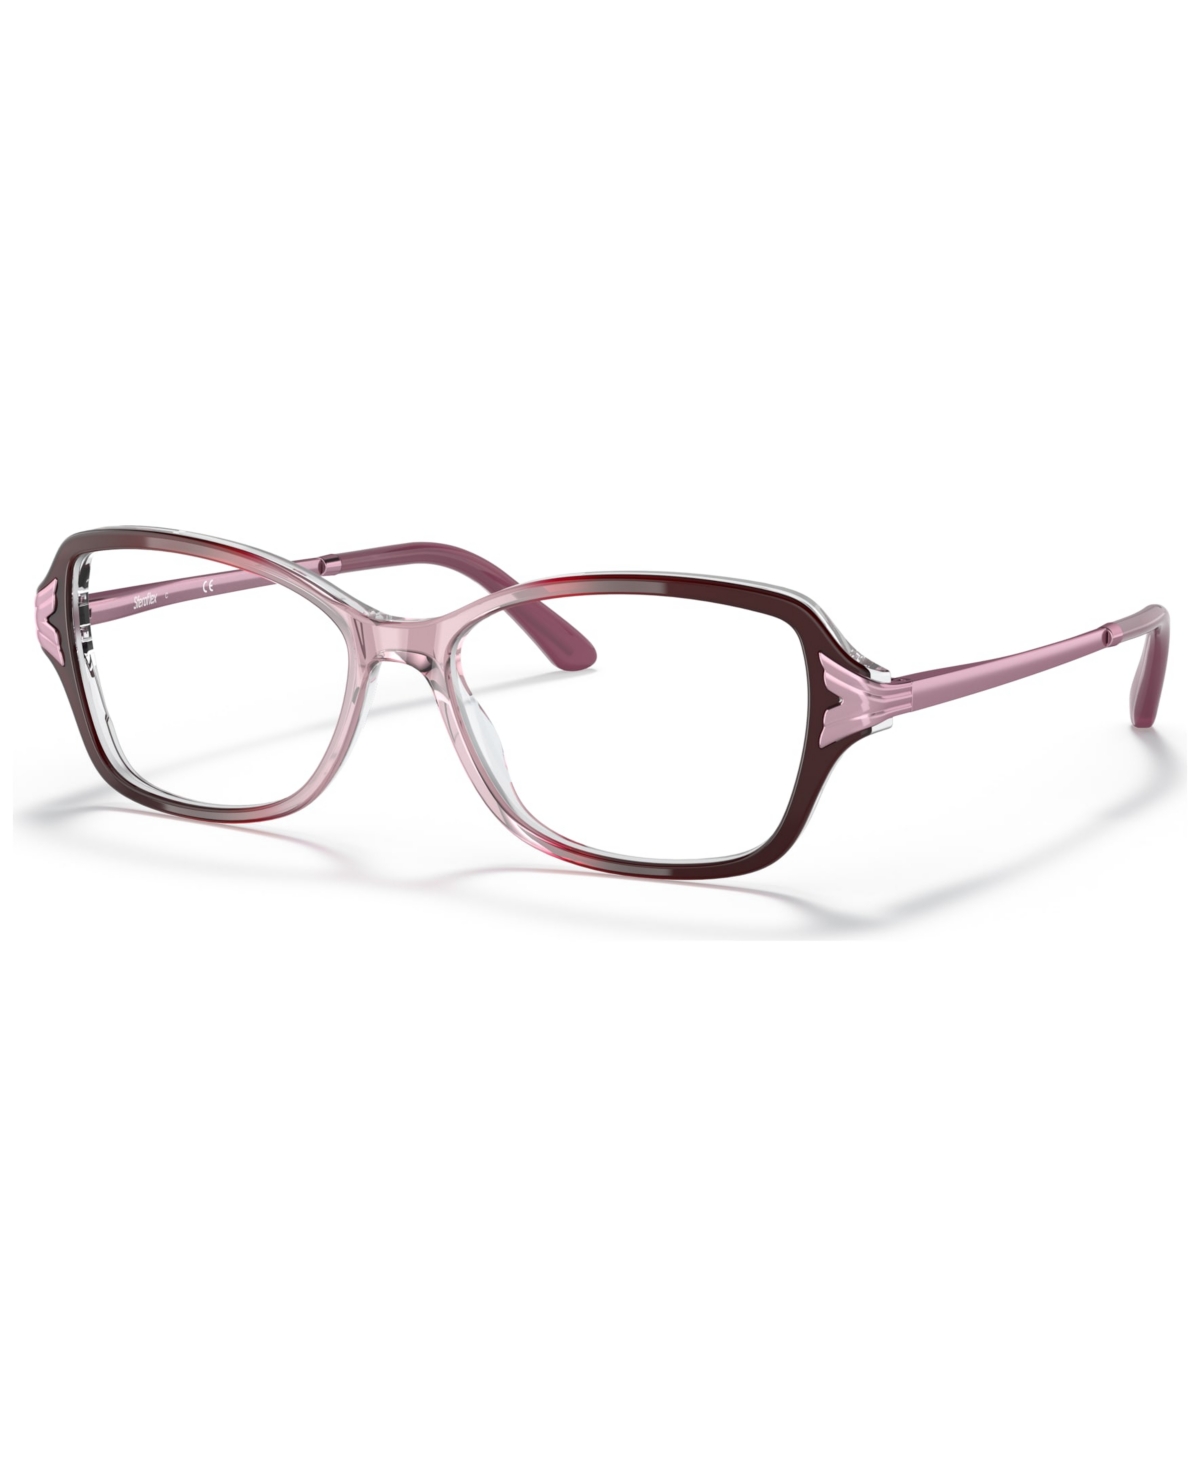 Steroflex Women's Eyeglasses, SF1576 - Light Pink Gradient